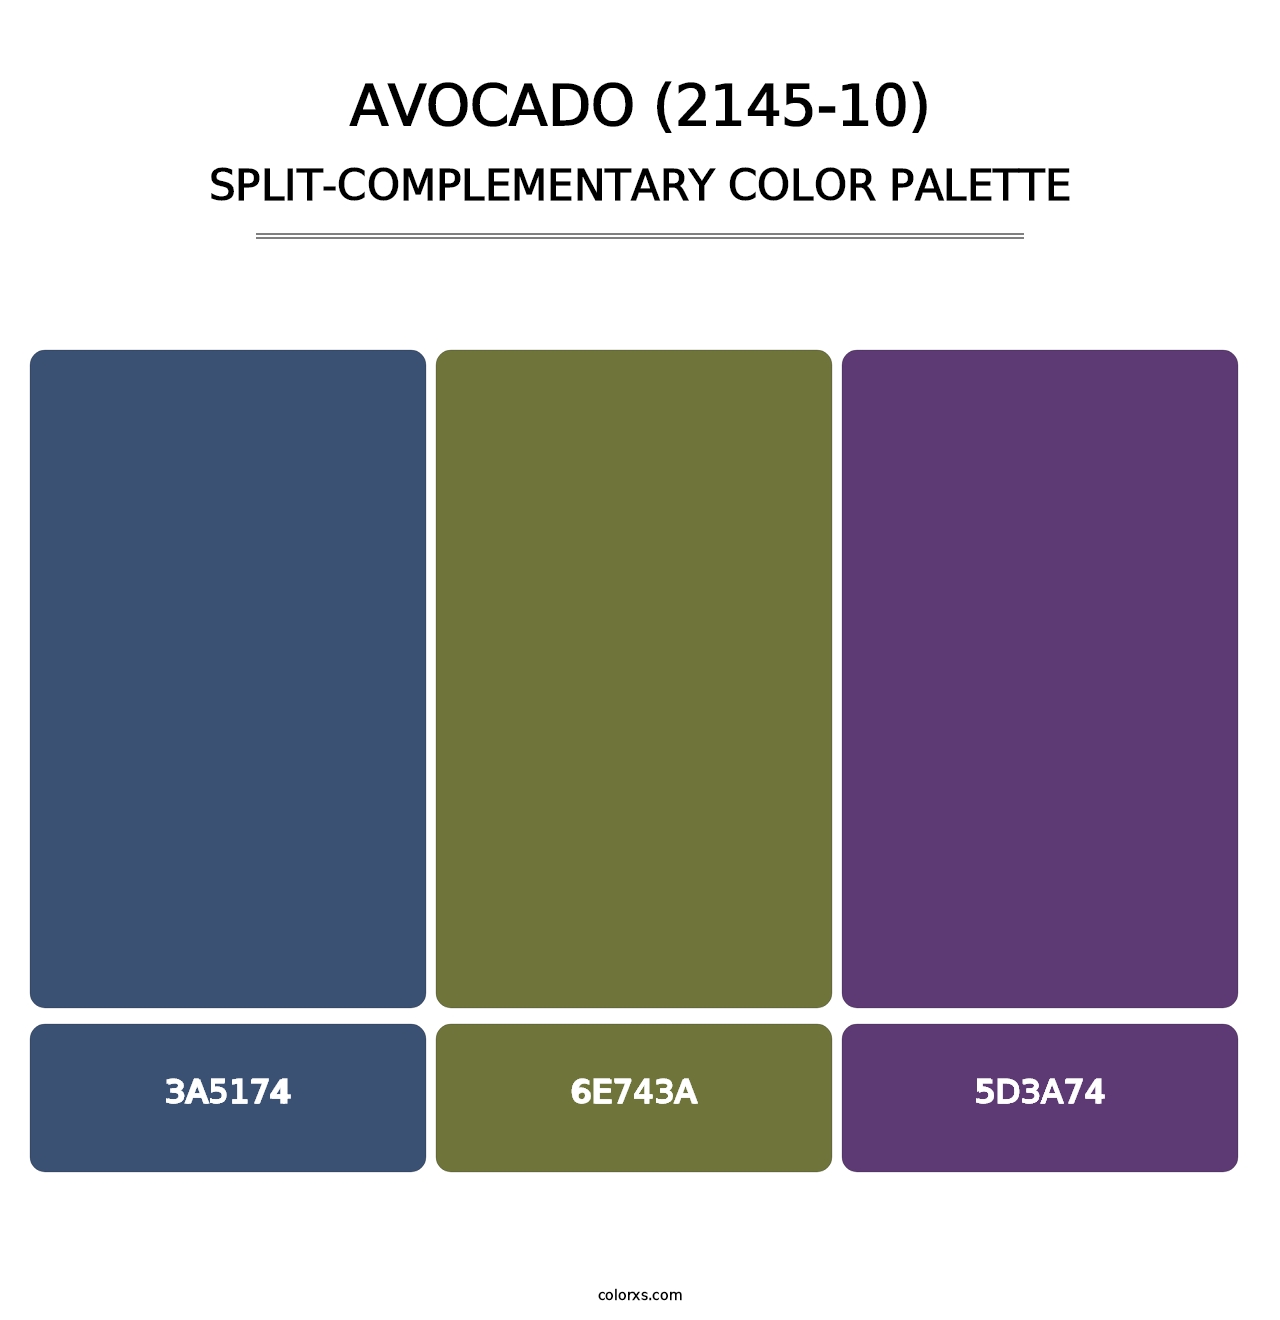 Avocado (2145-10) - Split-Complementary Color Palette